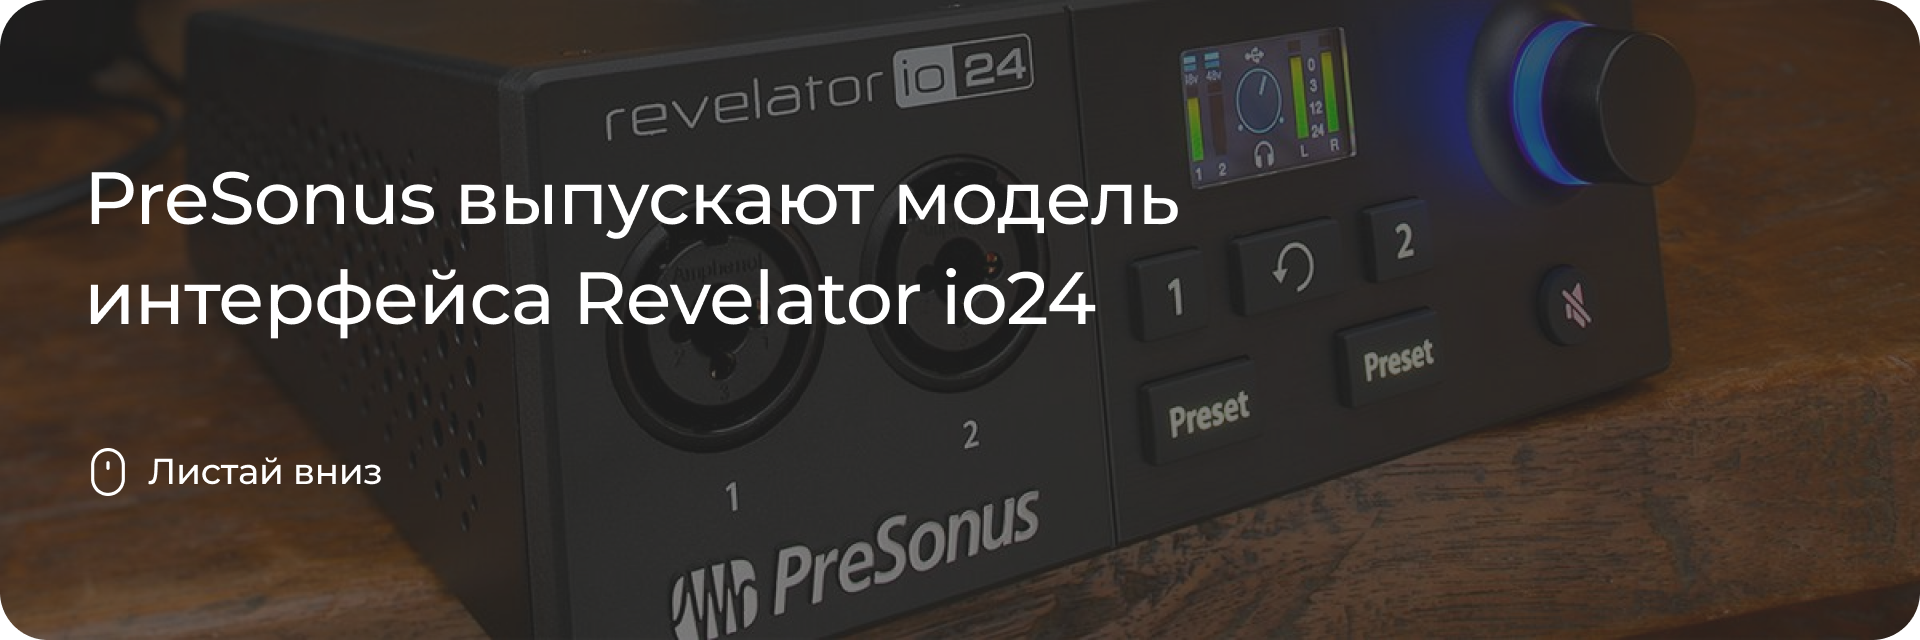 PreSonus выпускают Revelator io24